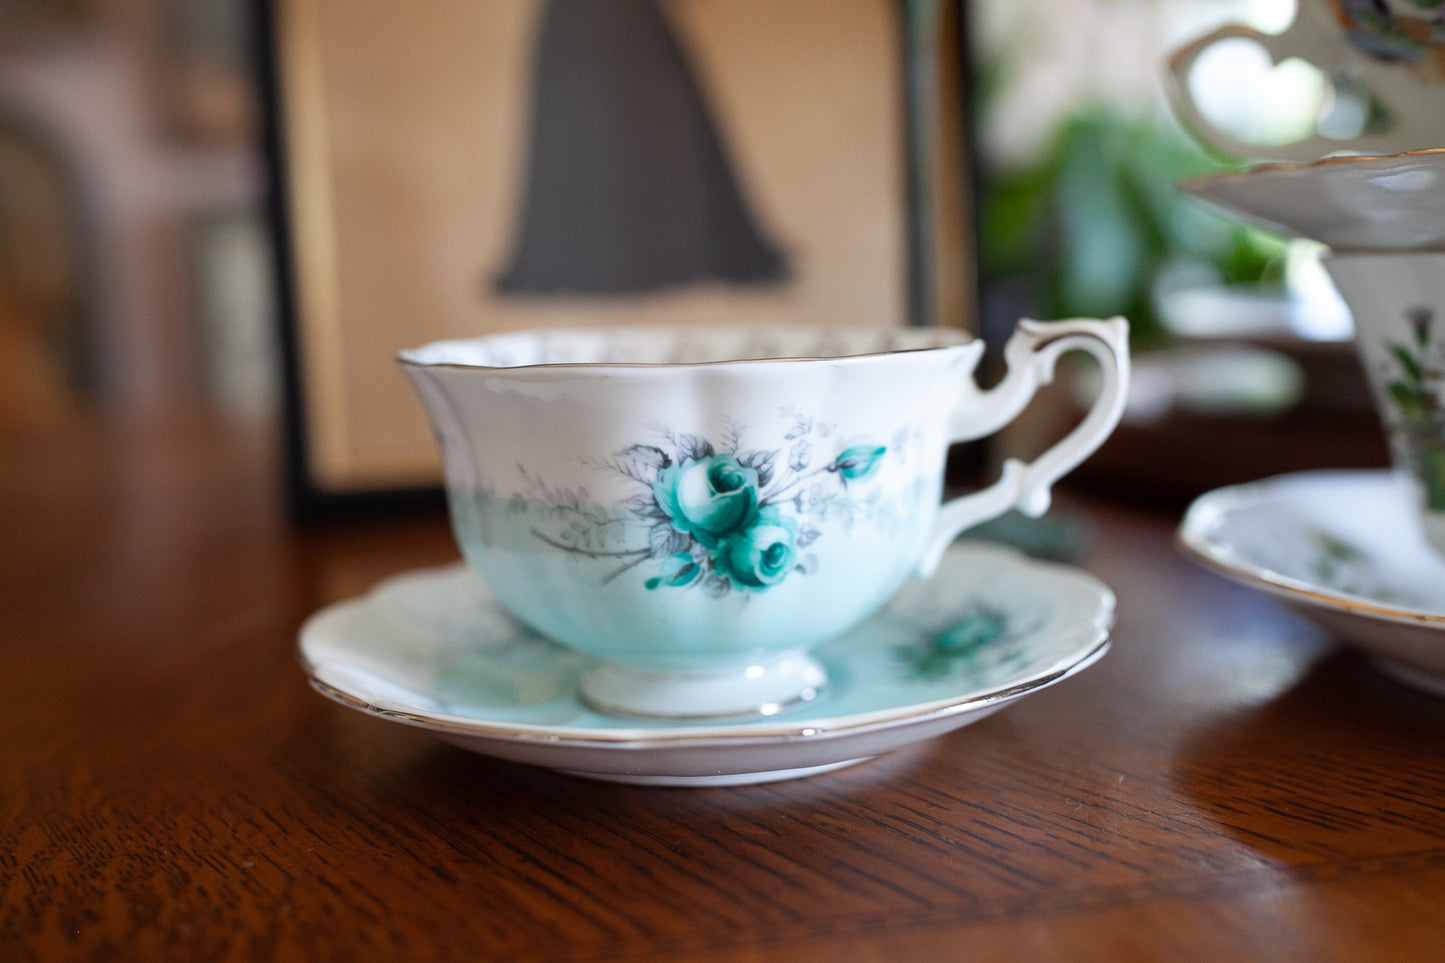 Royal Albert Bone China Teacup - Vintage Teacup and Saucer- Rose Marie Series Dawnsong